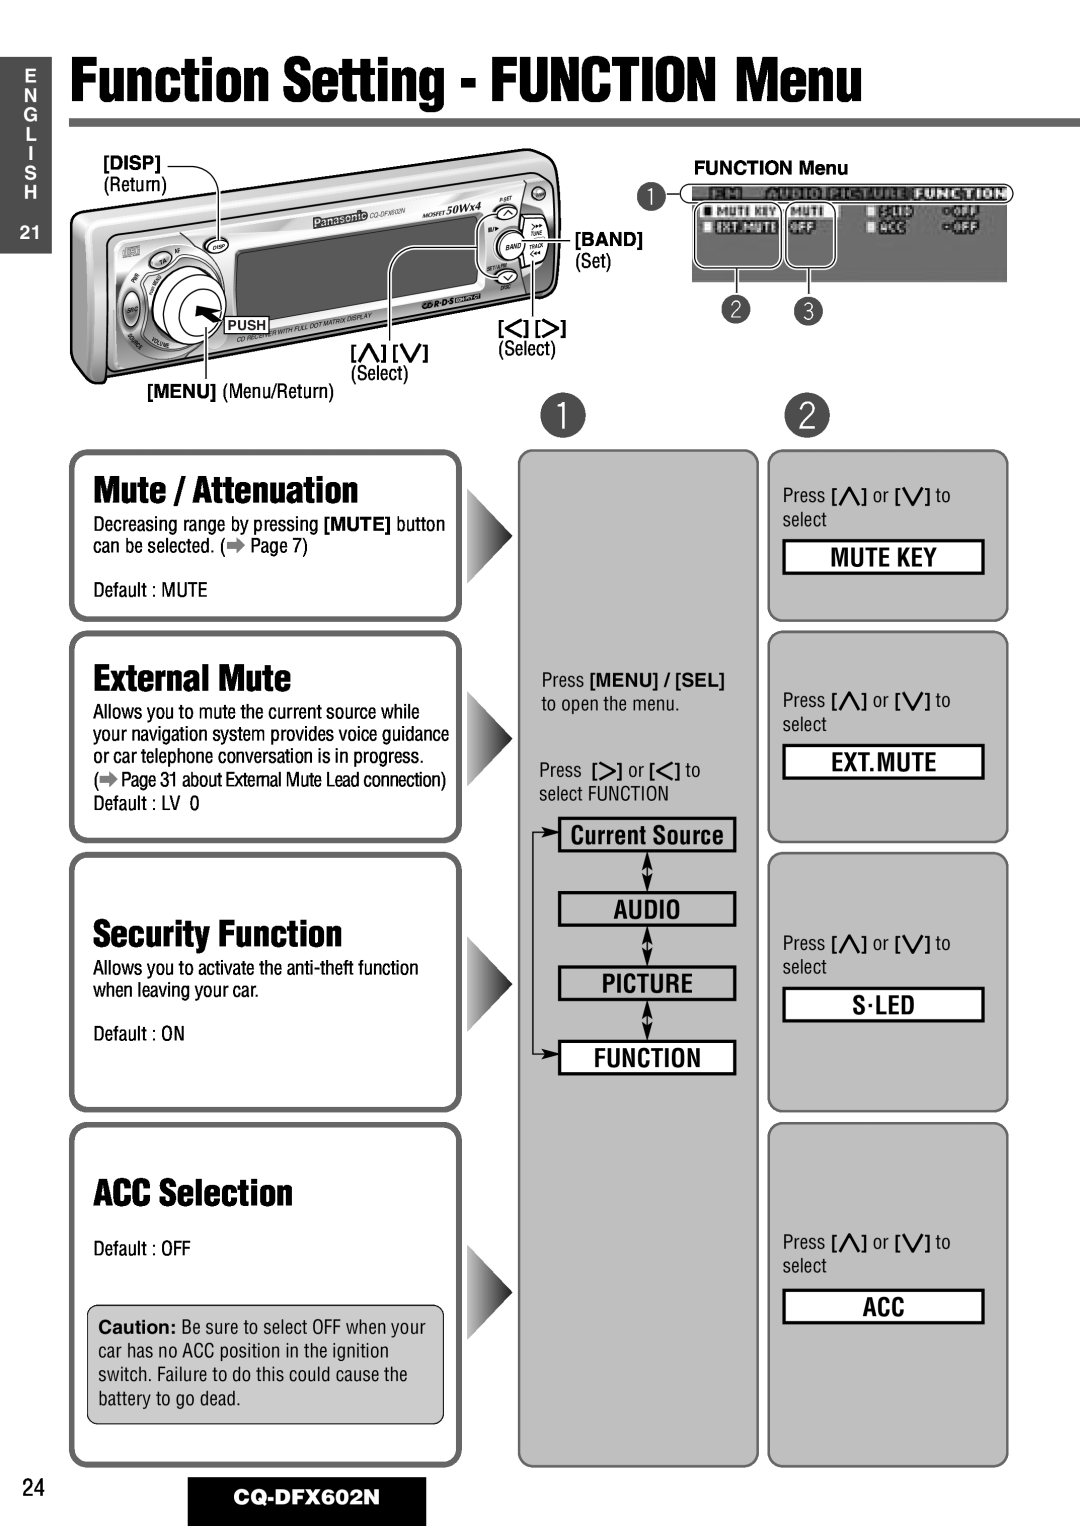 Panasonic CQ-DFX602N Function Setting - FUNCTION Menu, External Mute, Security Function, ACC Selection, Mute Key, Ext.Mute 